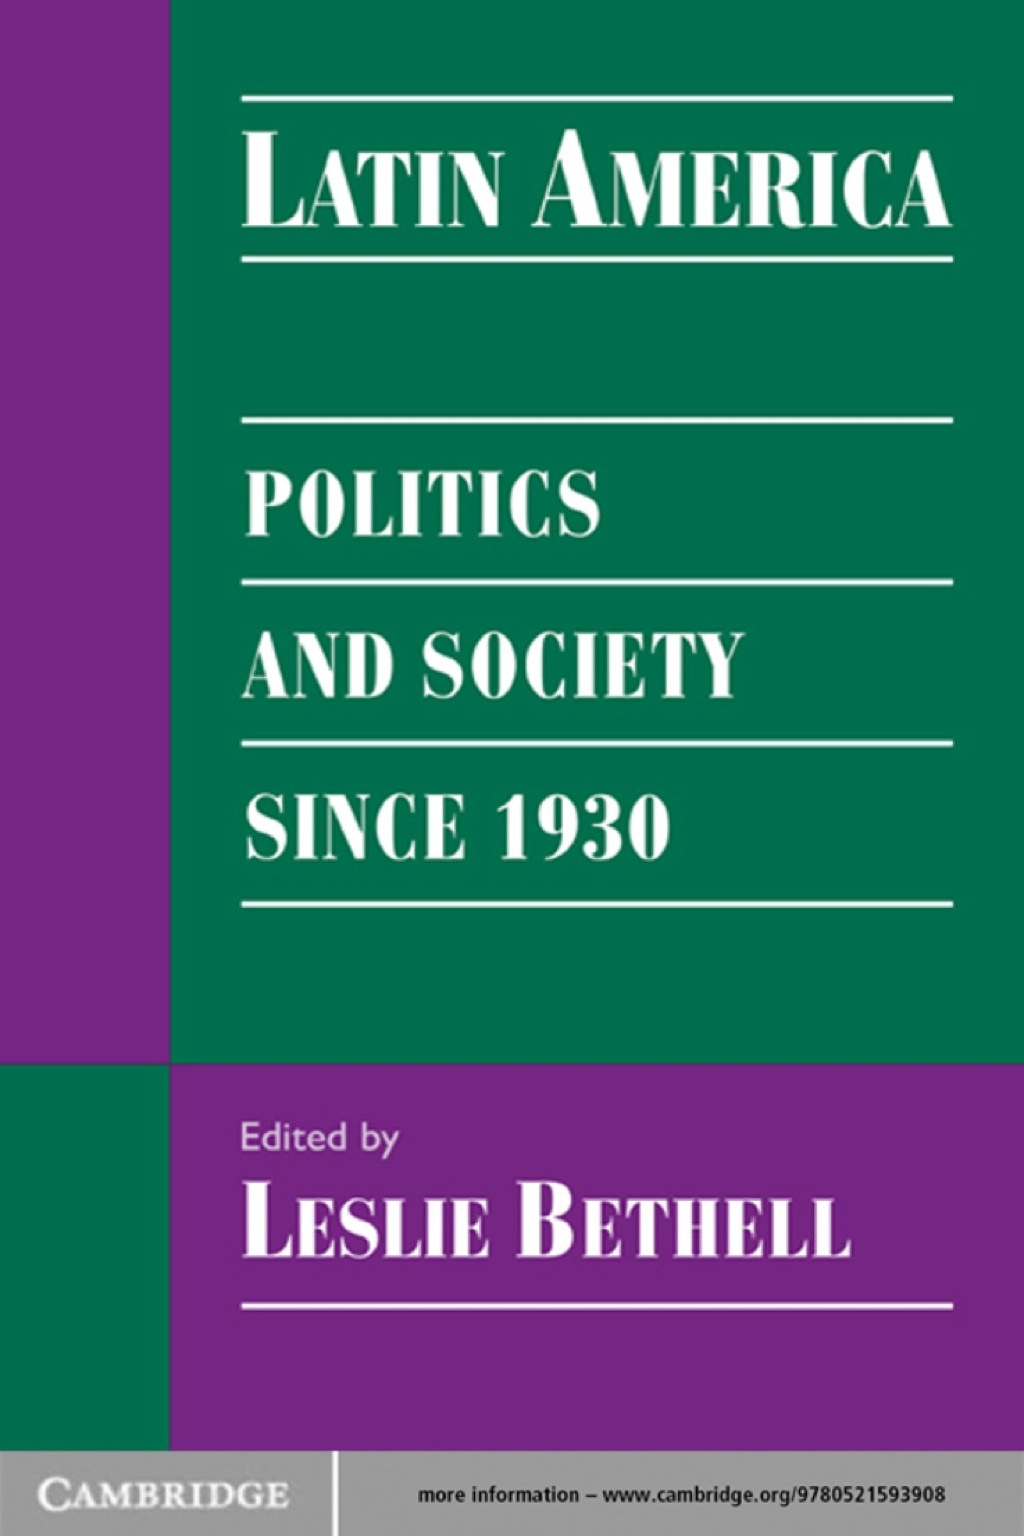 Latin America (eBook) - Leslie Bethell